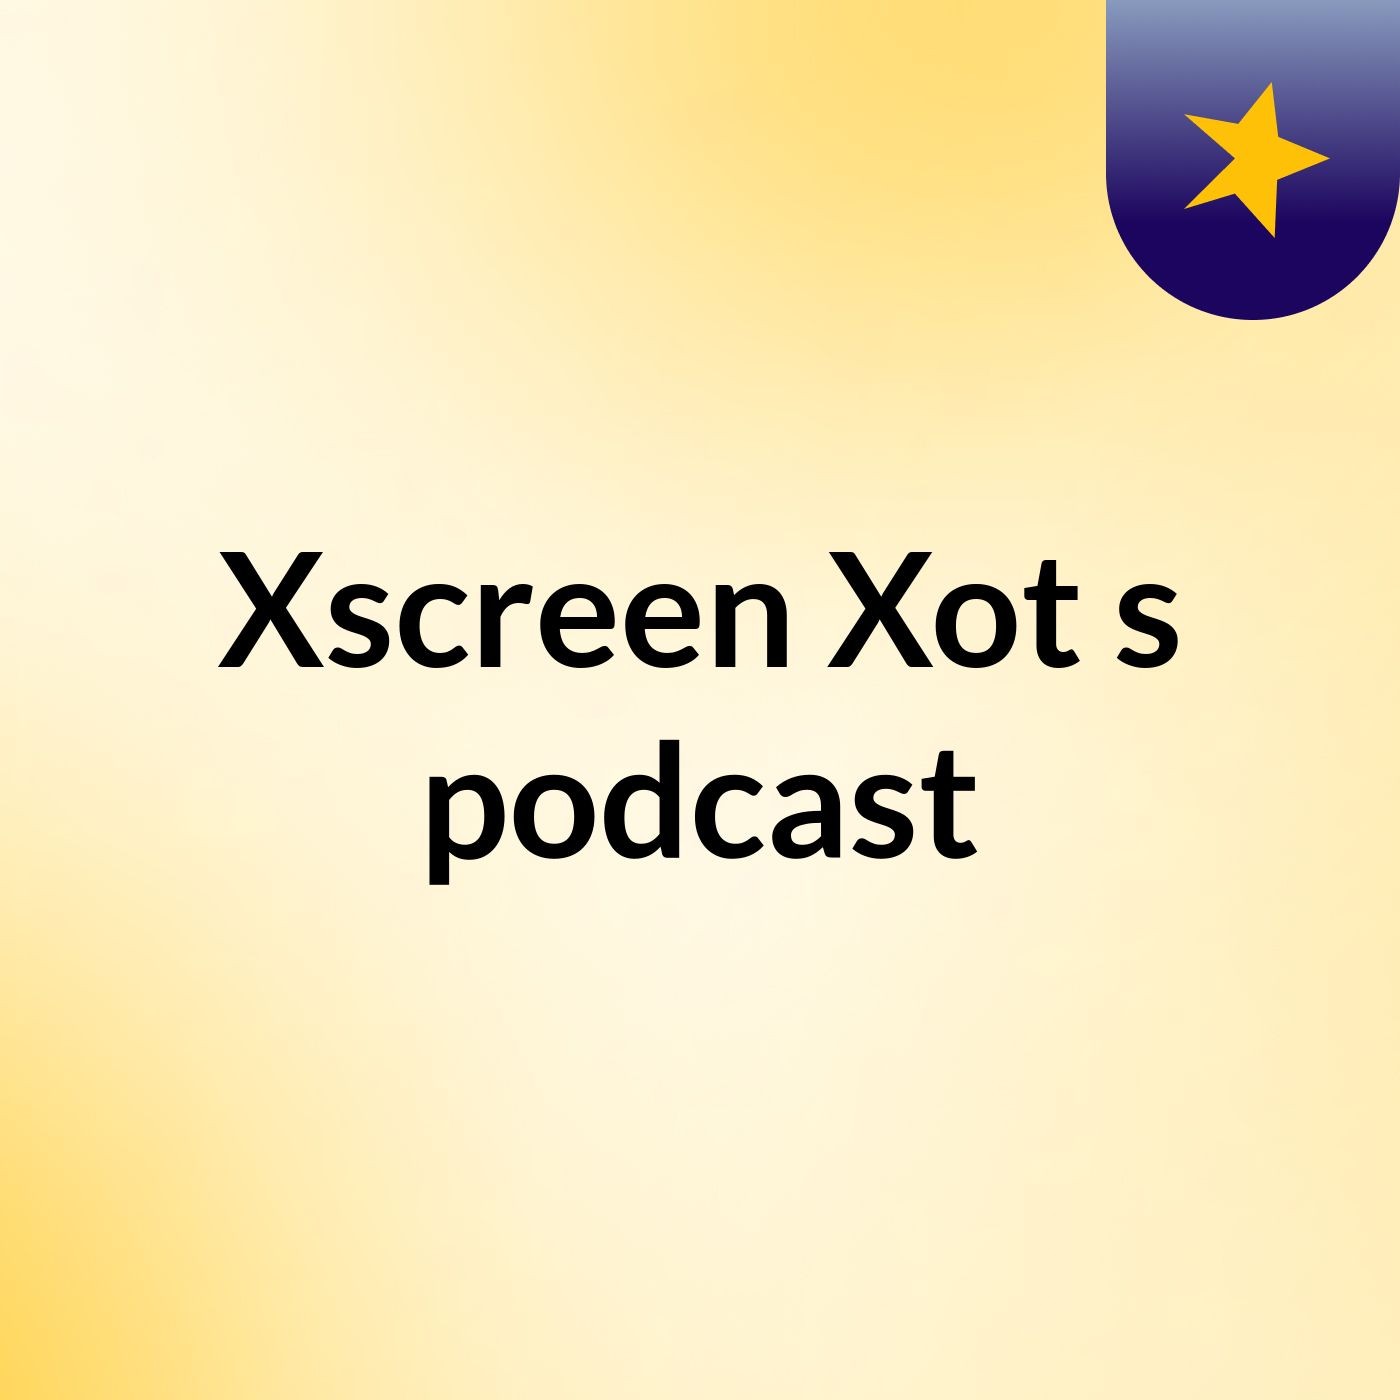 Episode 2 - Xscreen Xot's podcast